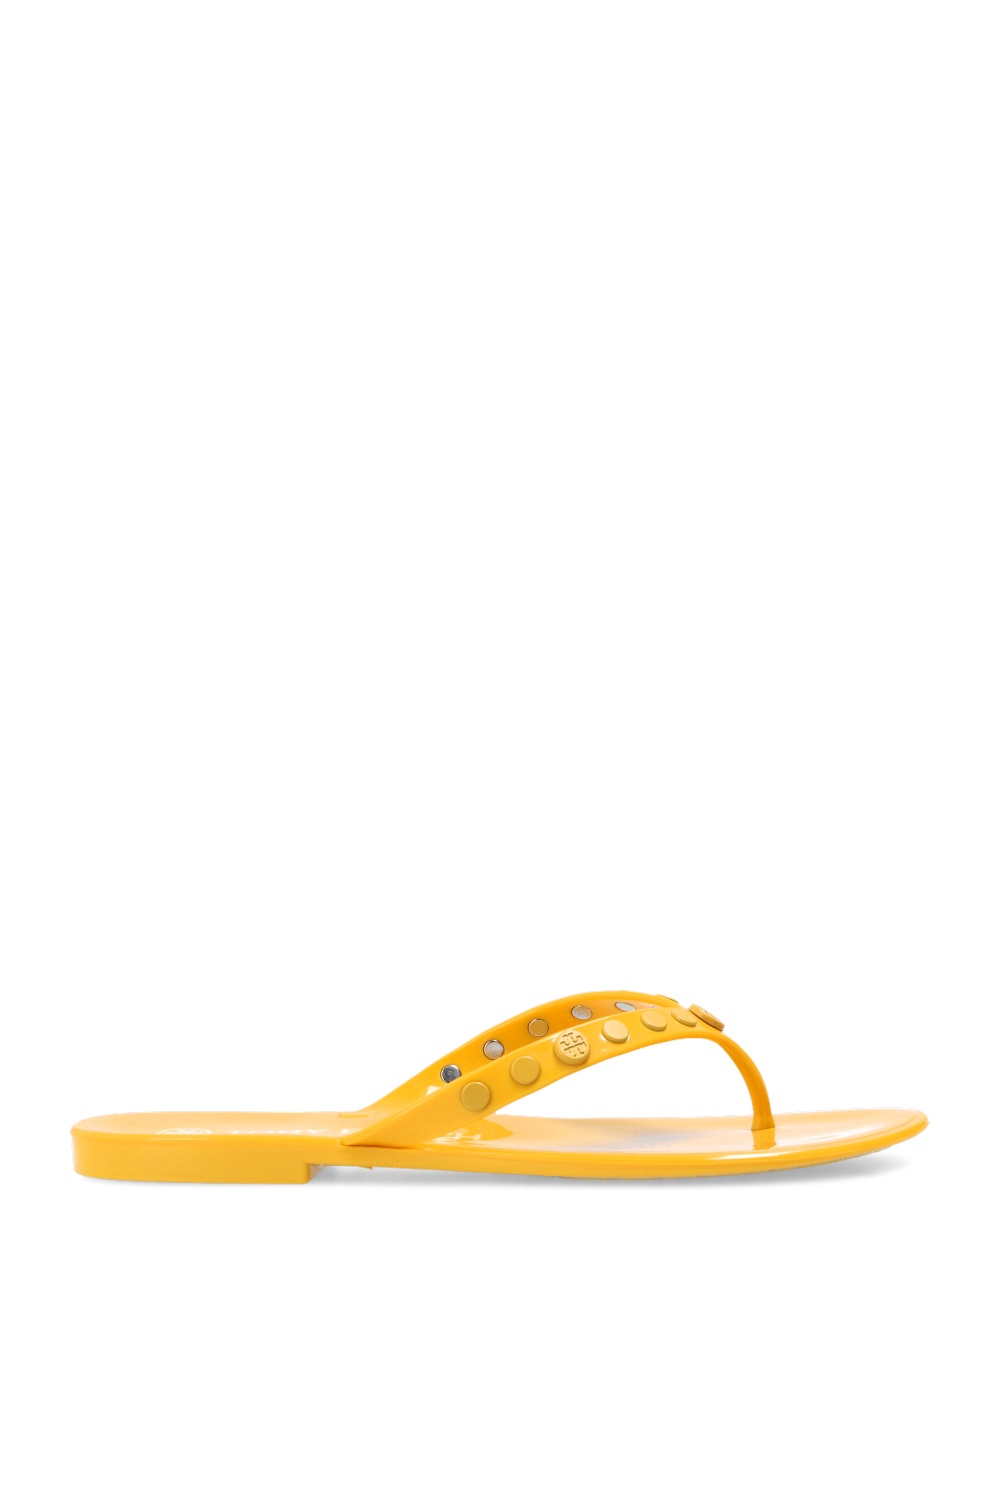 tory burch yellow flip flops